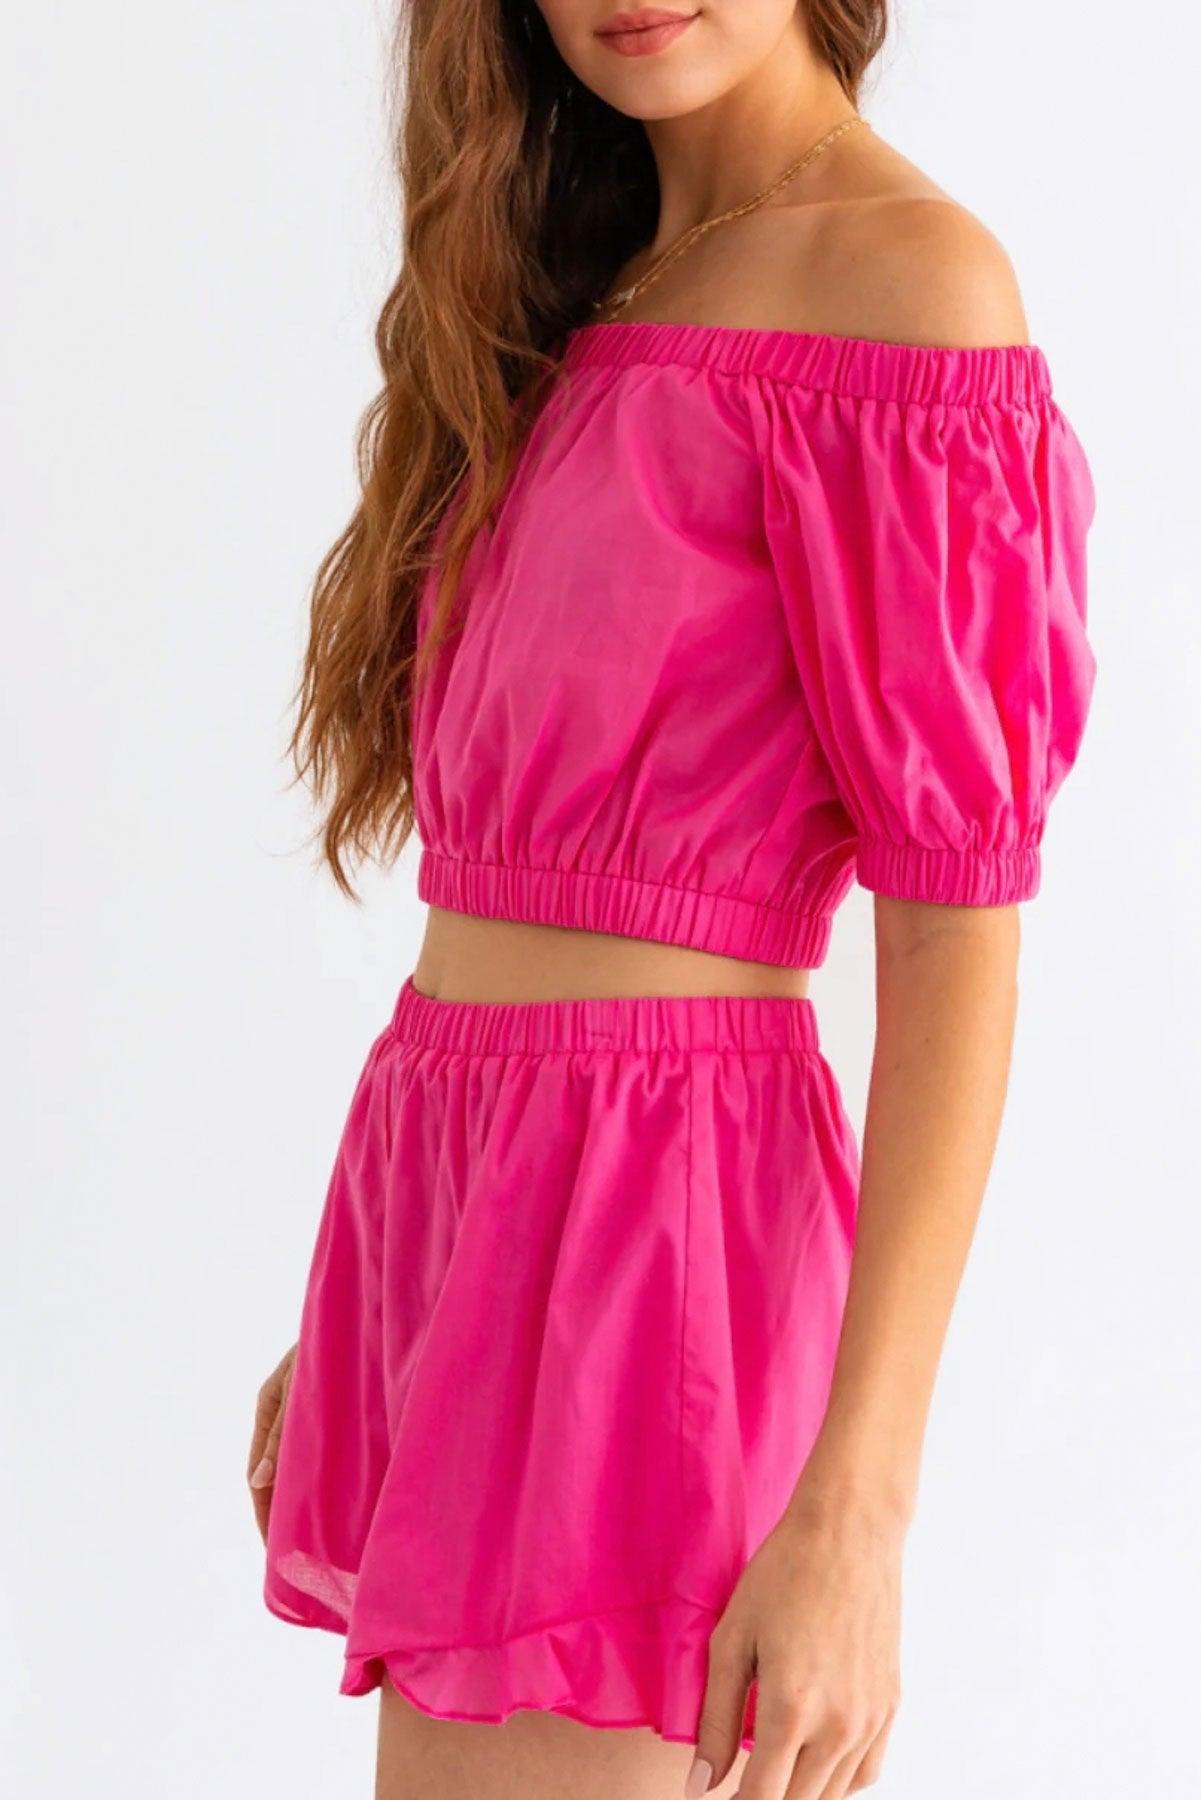 Hot Pink Off Shoulder Crop Top Ruffle Shorts Set - Tasha Apparel Wholesale